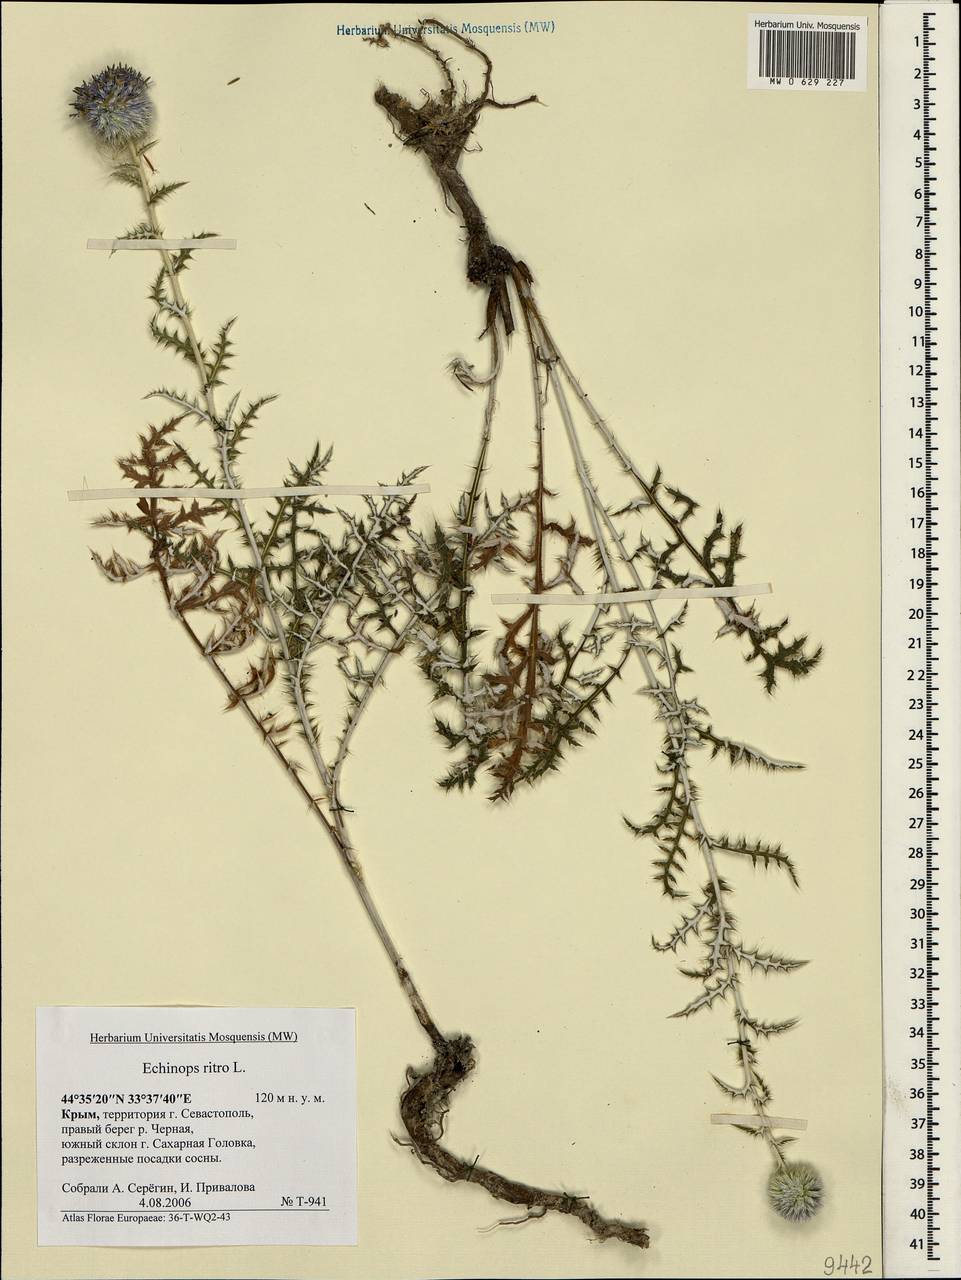 Echinops ritro subsp. ruthenicus (M. Bieb.) Nyman, Crimea (KRYM) (Russia)